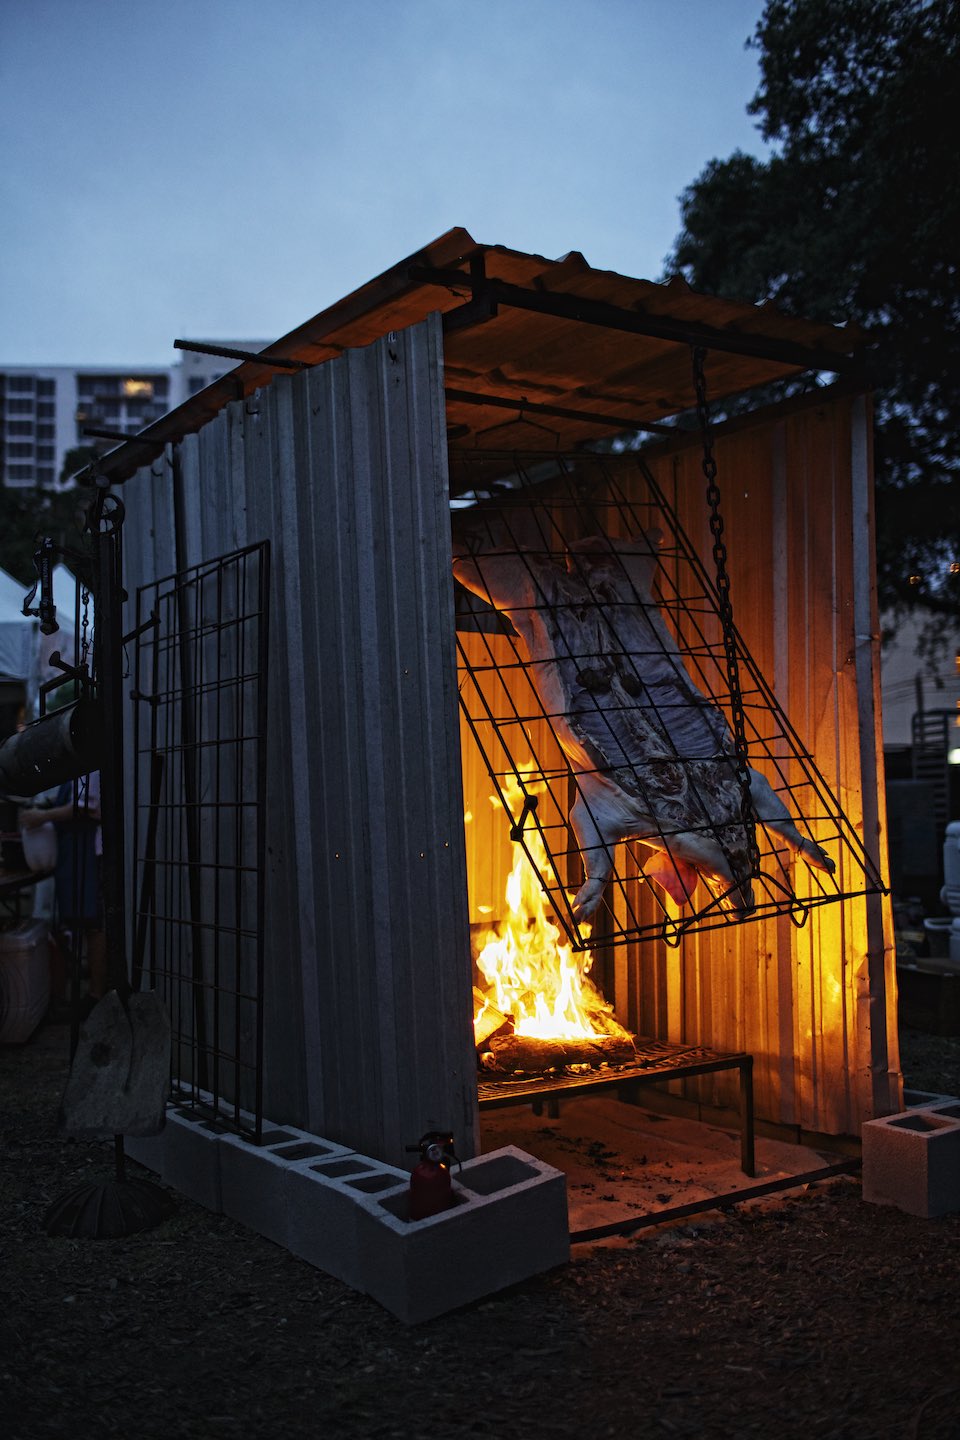 Jody Horton Photography - Pig roasting above the fire.